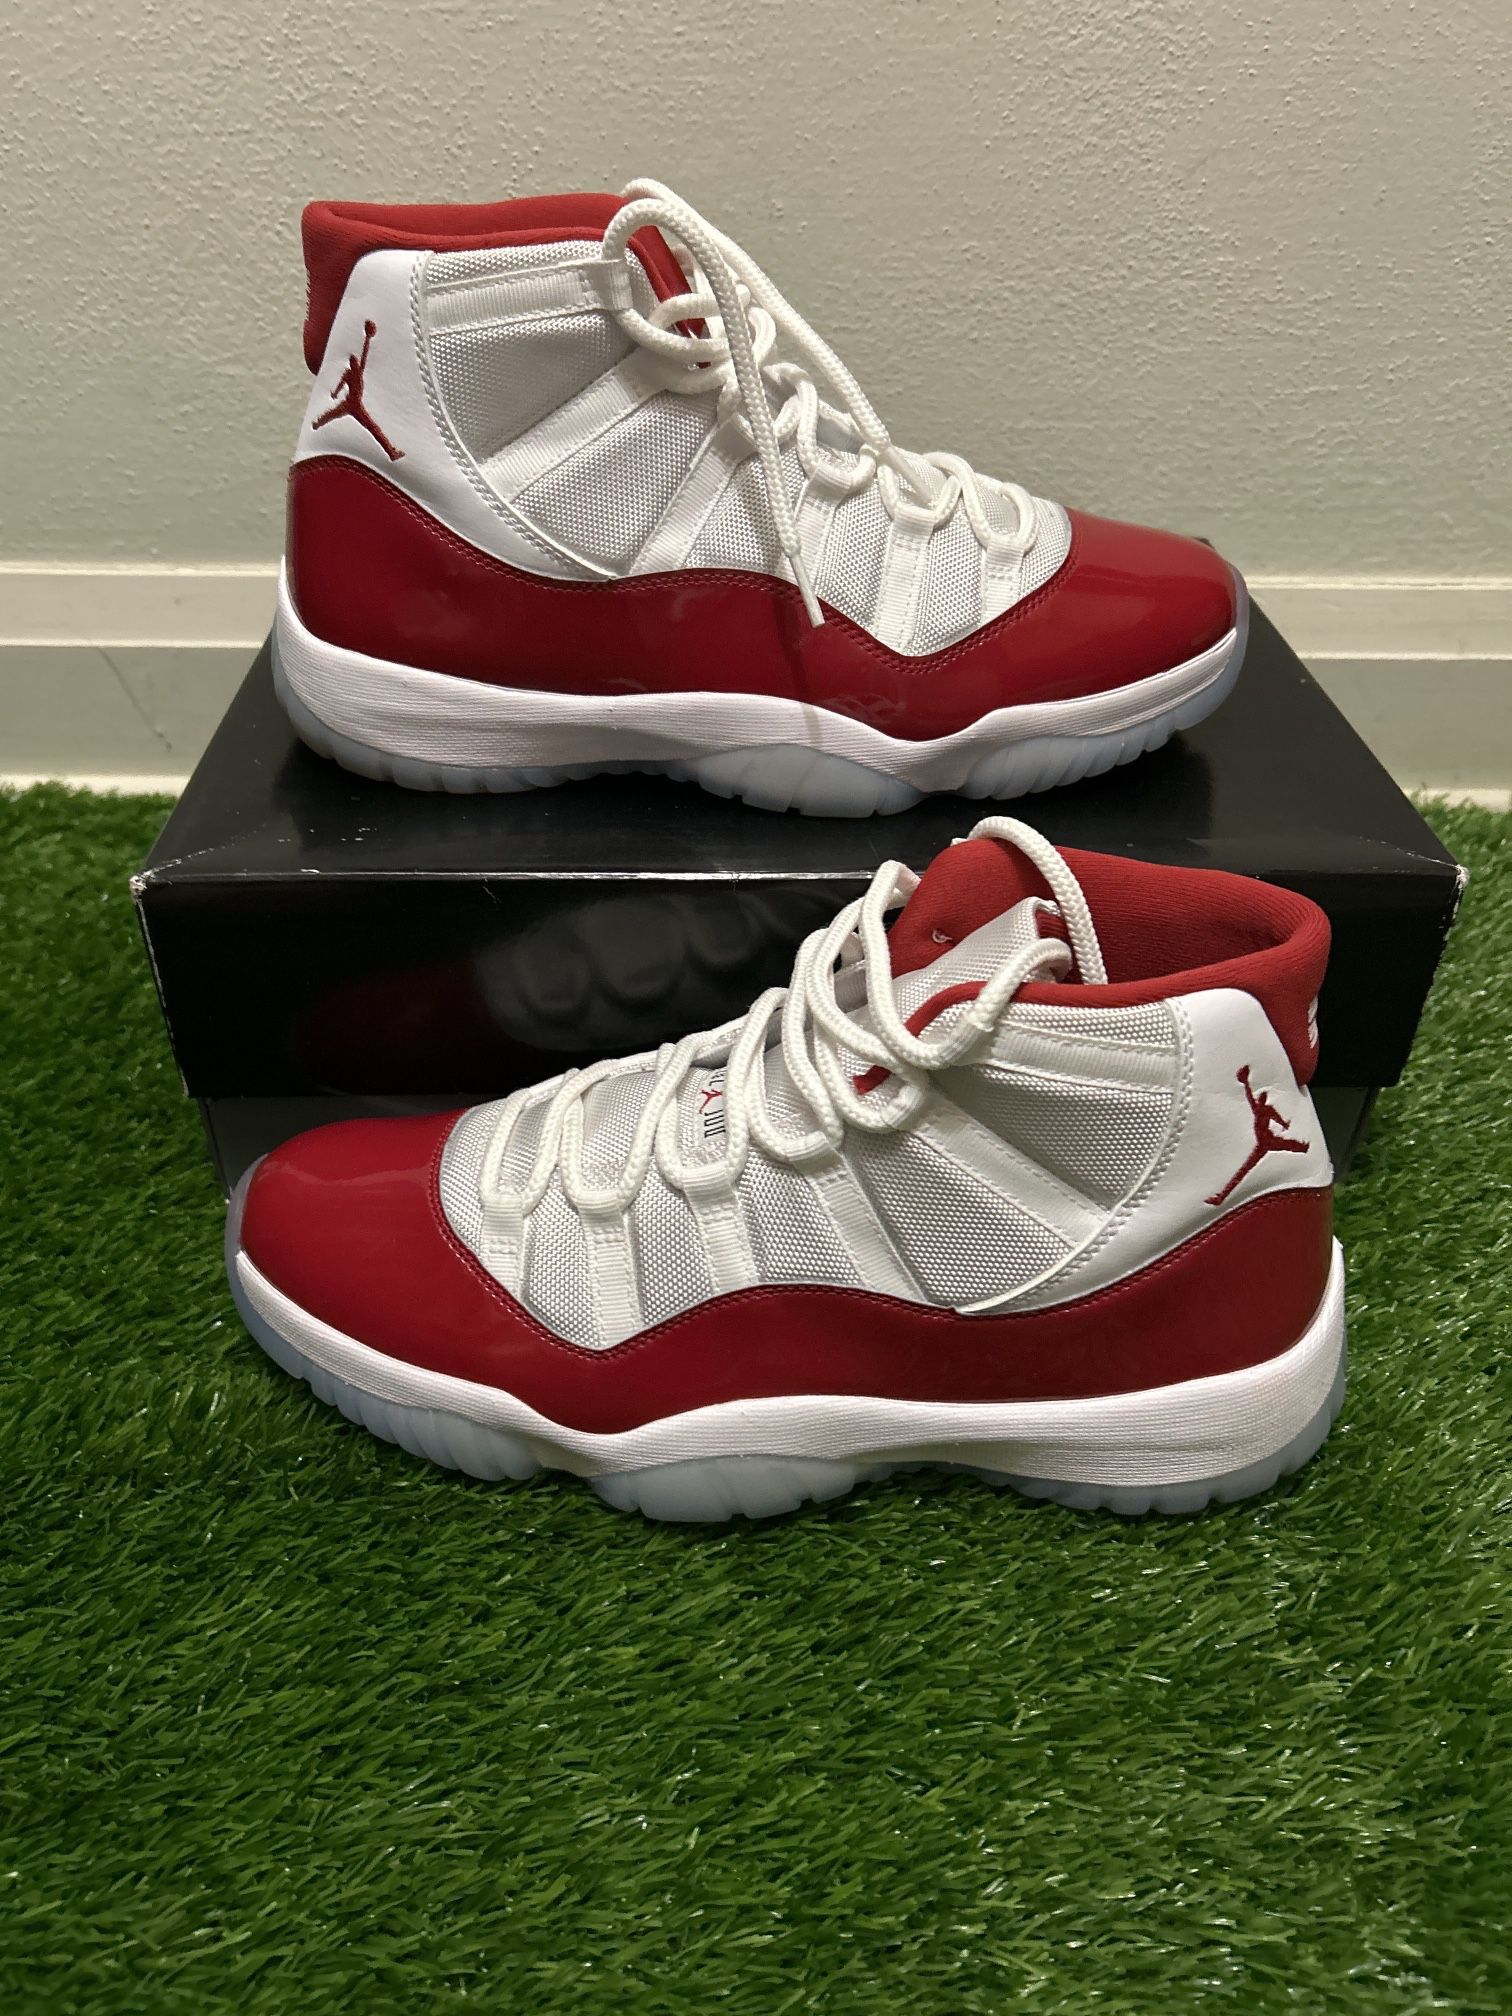 Jordan 11 “Cherry” Size 11.5 